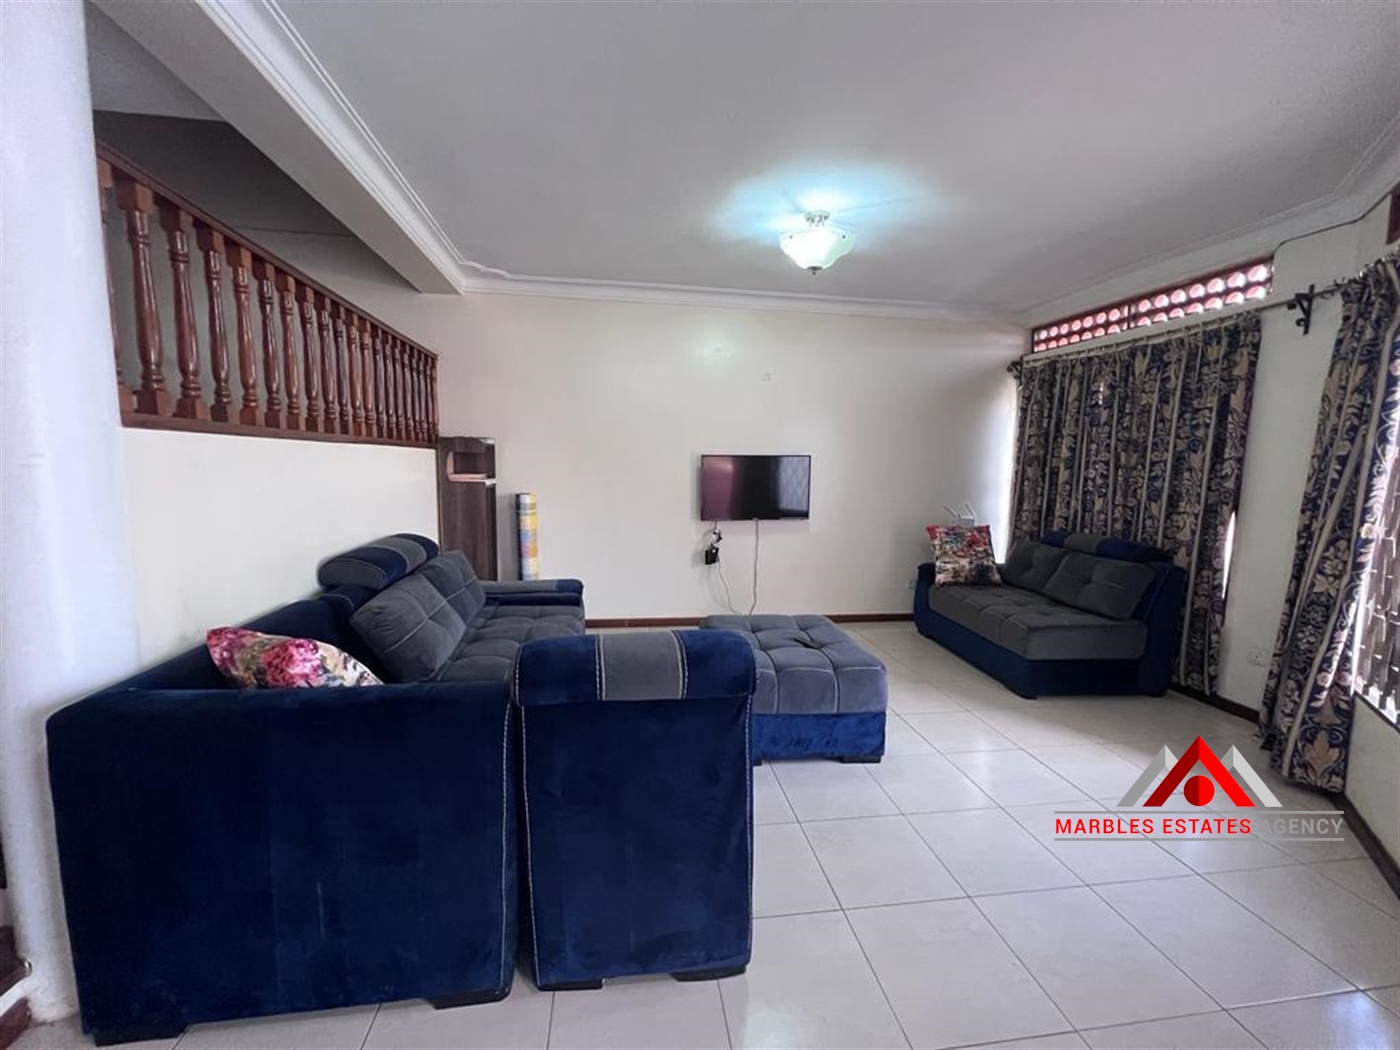 2 Bedroom Town House For Rent In Naguru Kampala Uganda Code 07 10 22